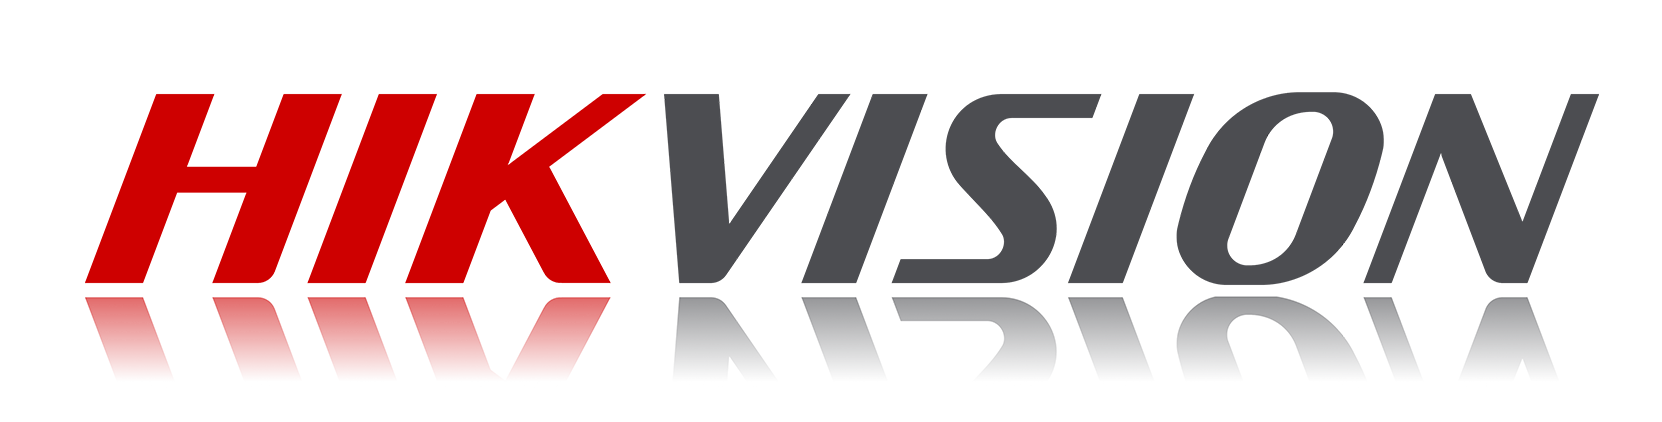 kisspng-logo-brand-trademark-product-hikvision-scb-s-io-ca-best-cctv-installation-services-abu-dhabi-cctv-c-5b6915c5ec04d4.3245370215336135099667.png